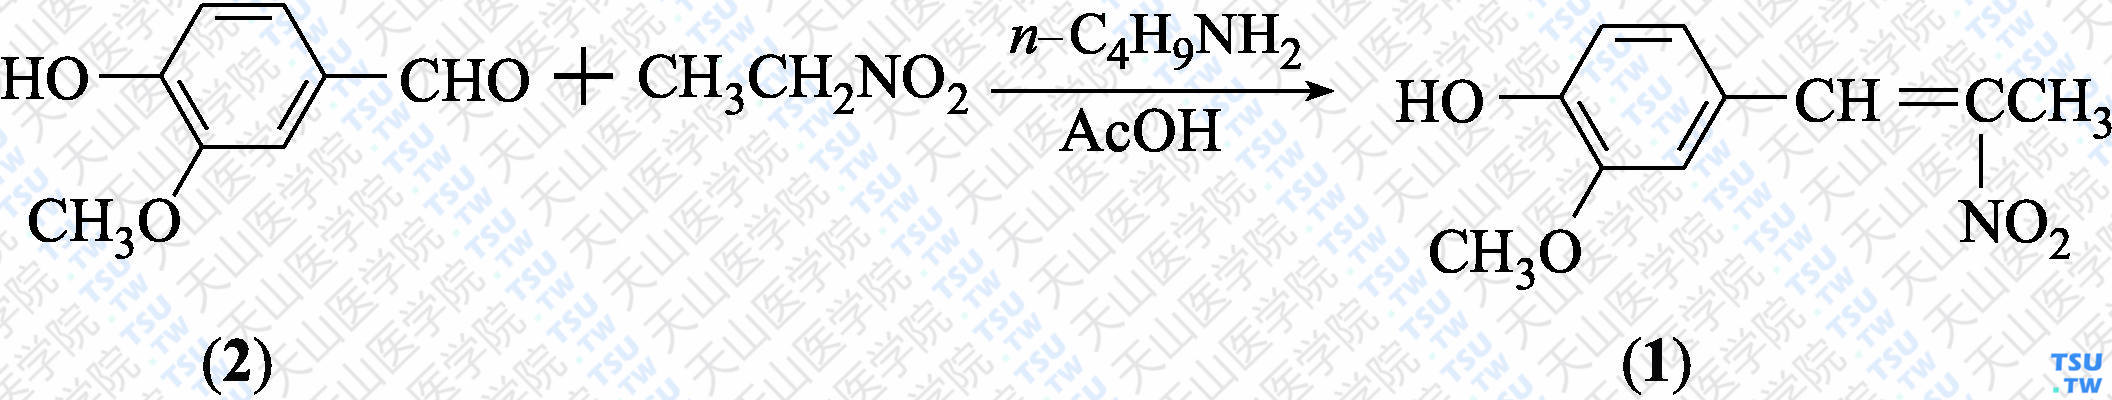 2-甲氧基-4-（2-硝基-1-丙烯基）苯酚（分子式：C<sub>10</sub>H<sub>11</sub>NO<sub>4</sub>）的合成方法路线及其结构式